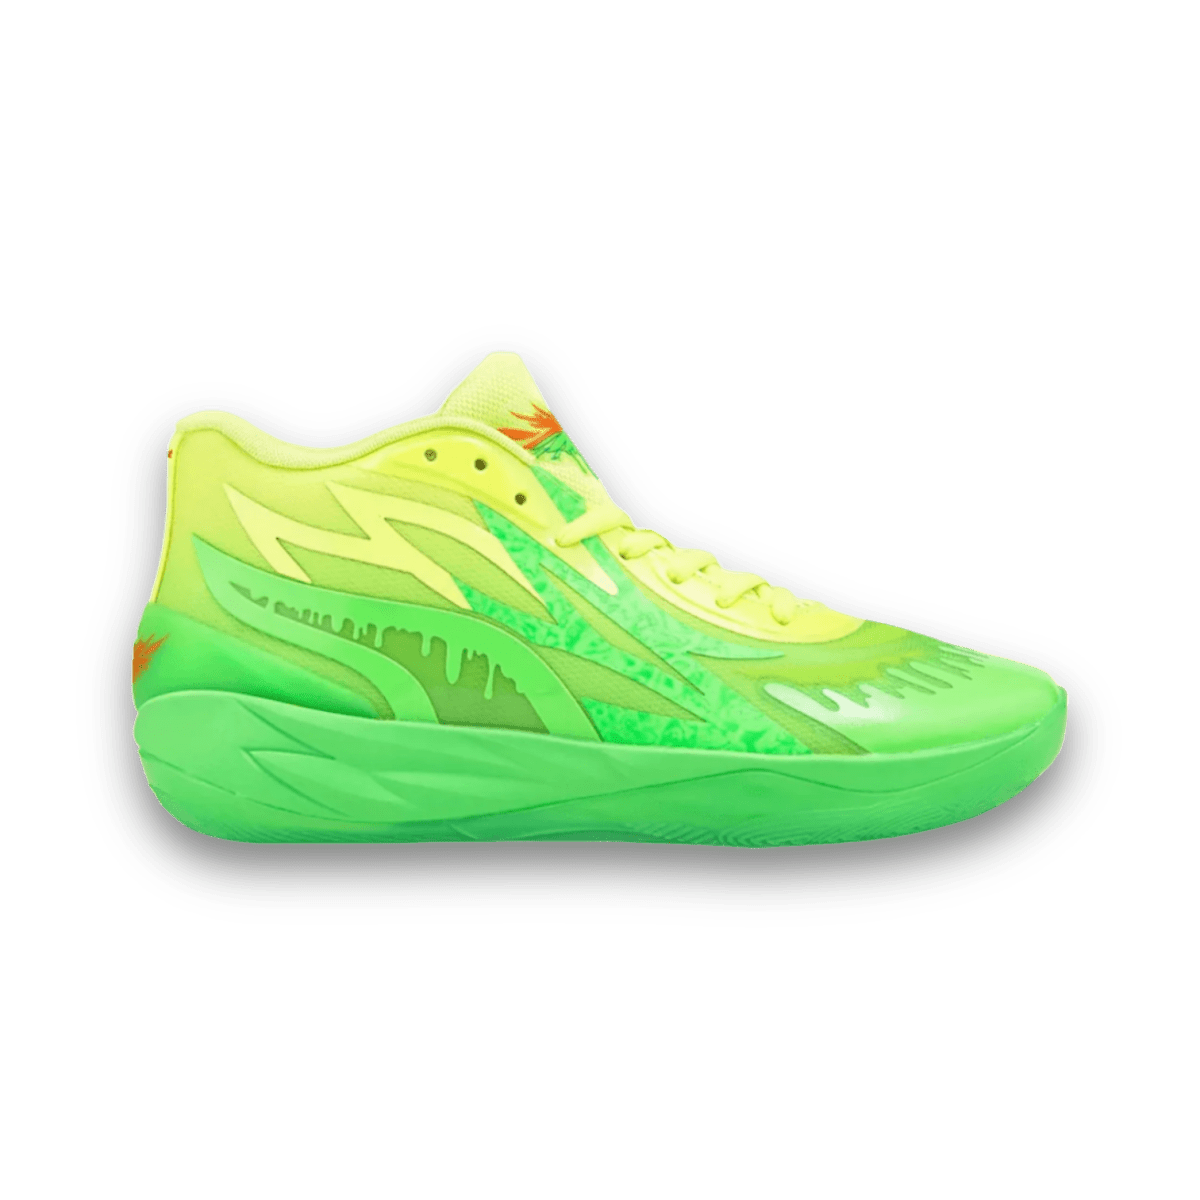 Puma LaMelo Ball Nickelodeon x MB.02 'Slime' - Mid Sneaker - Jawns on Fire Sneakers & Streetwear